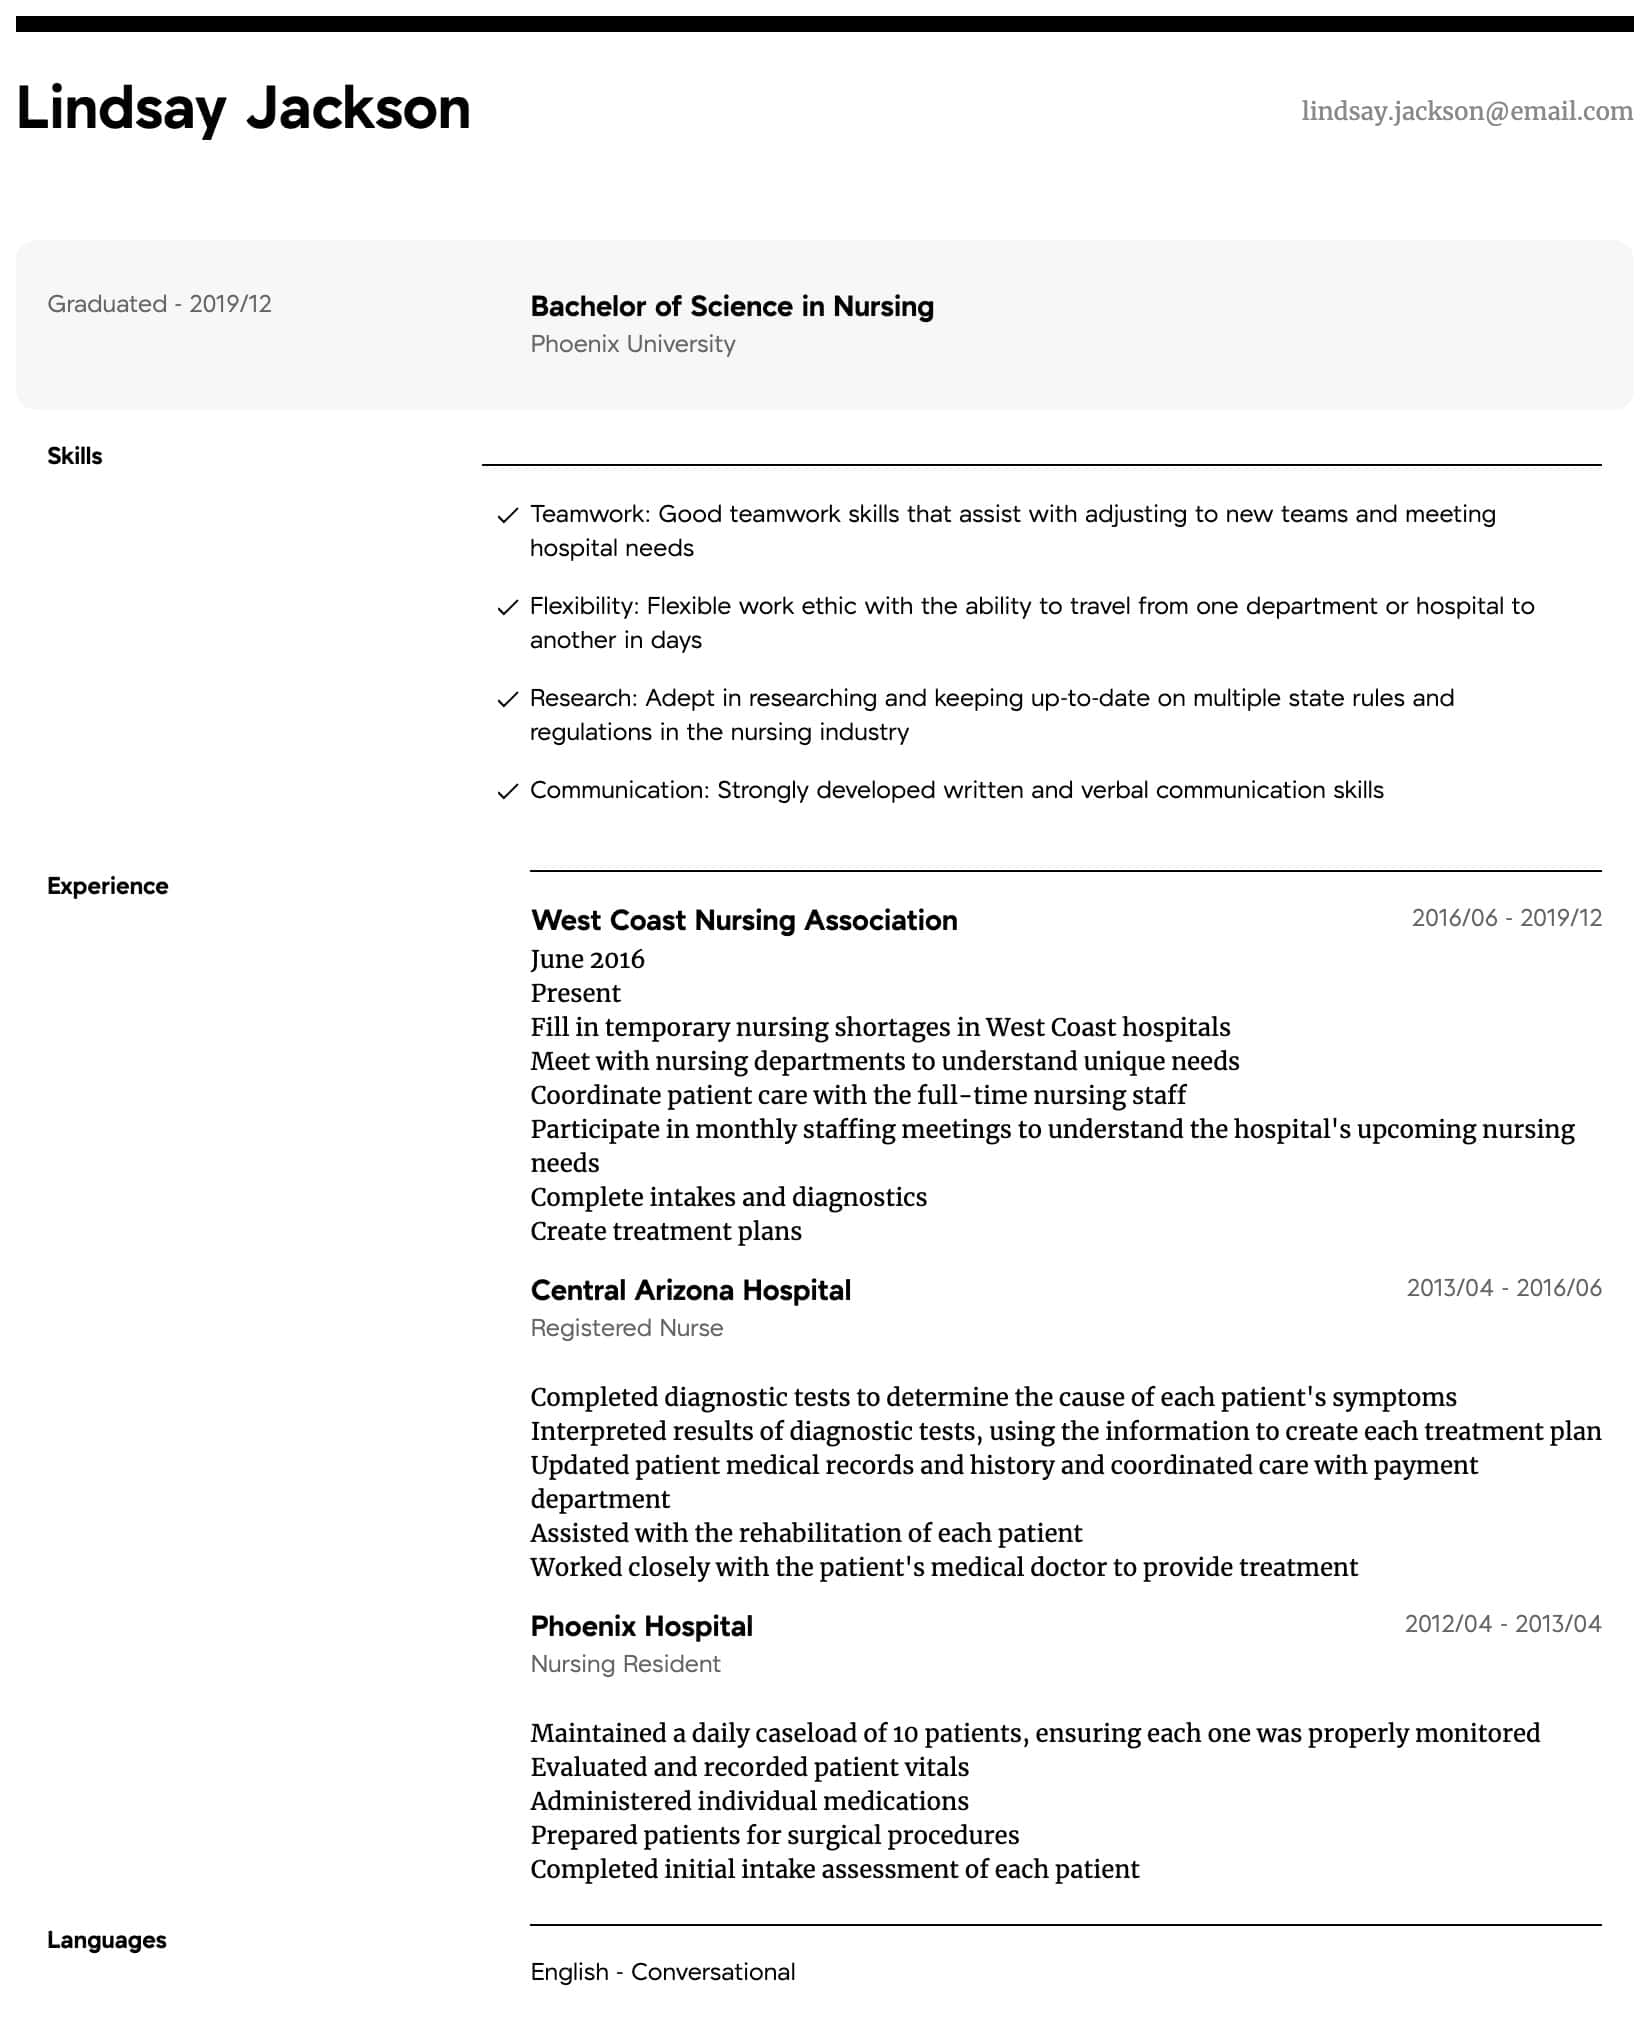 thumbnail image of Travel Nursing resume from Resume.com